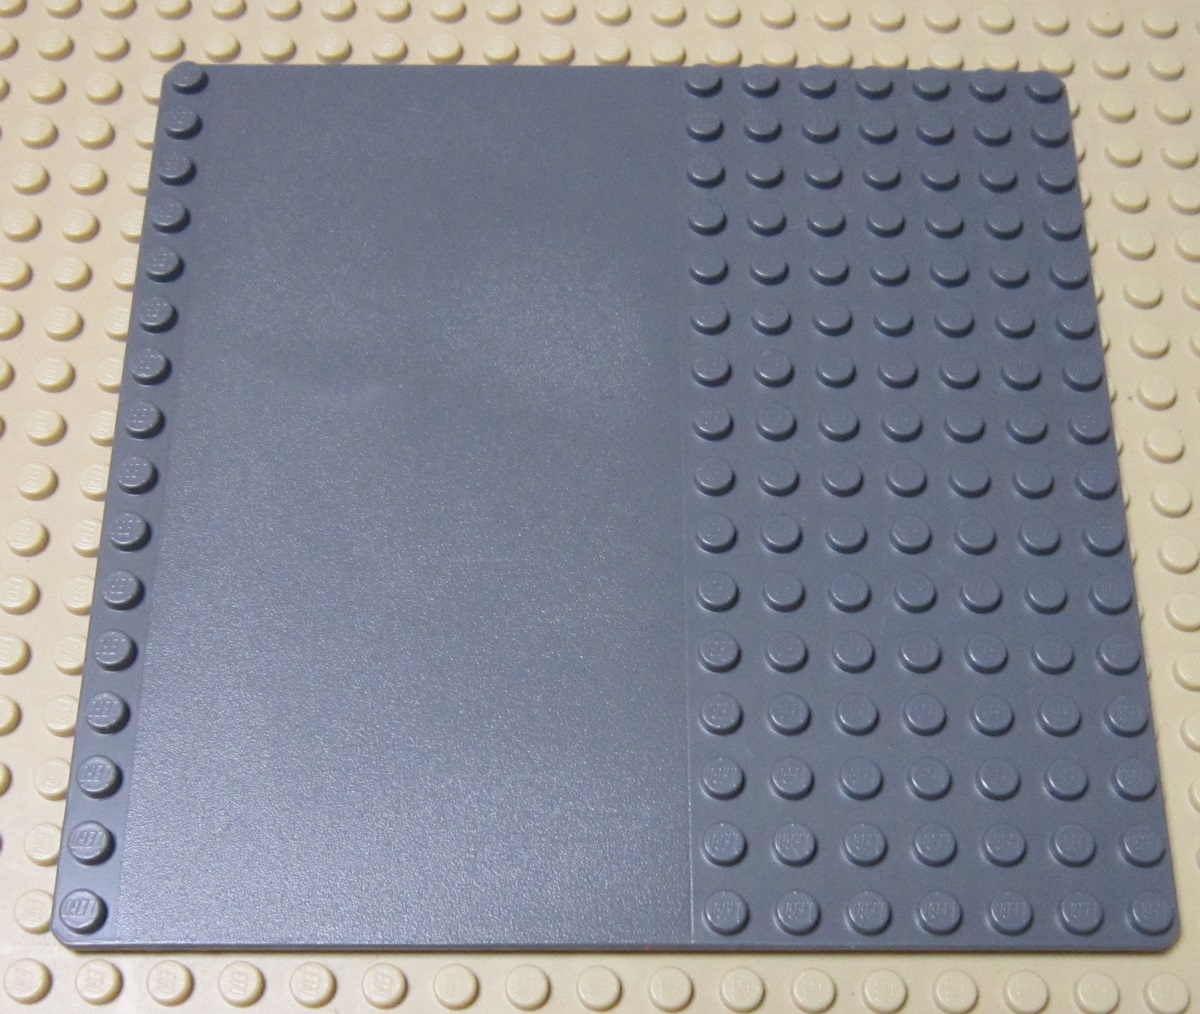 0500 Lego special plader 16 * 16 (1 mm)